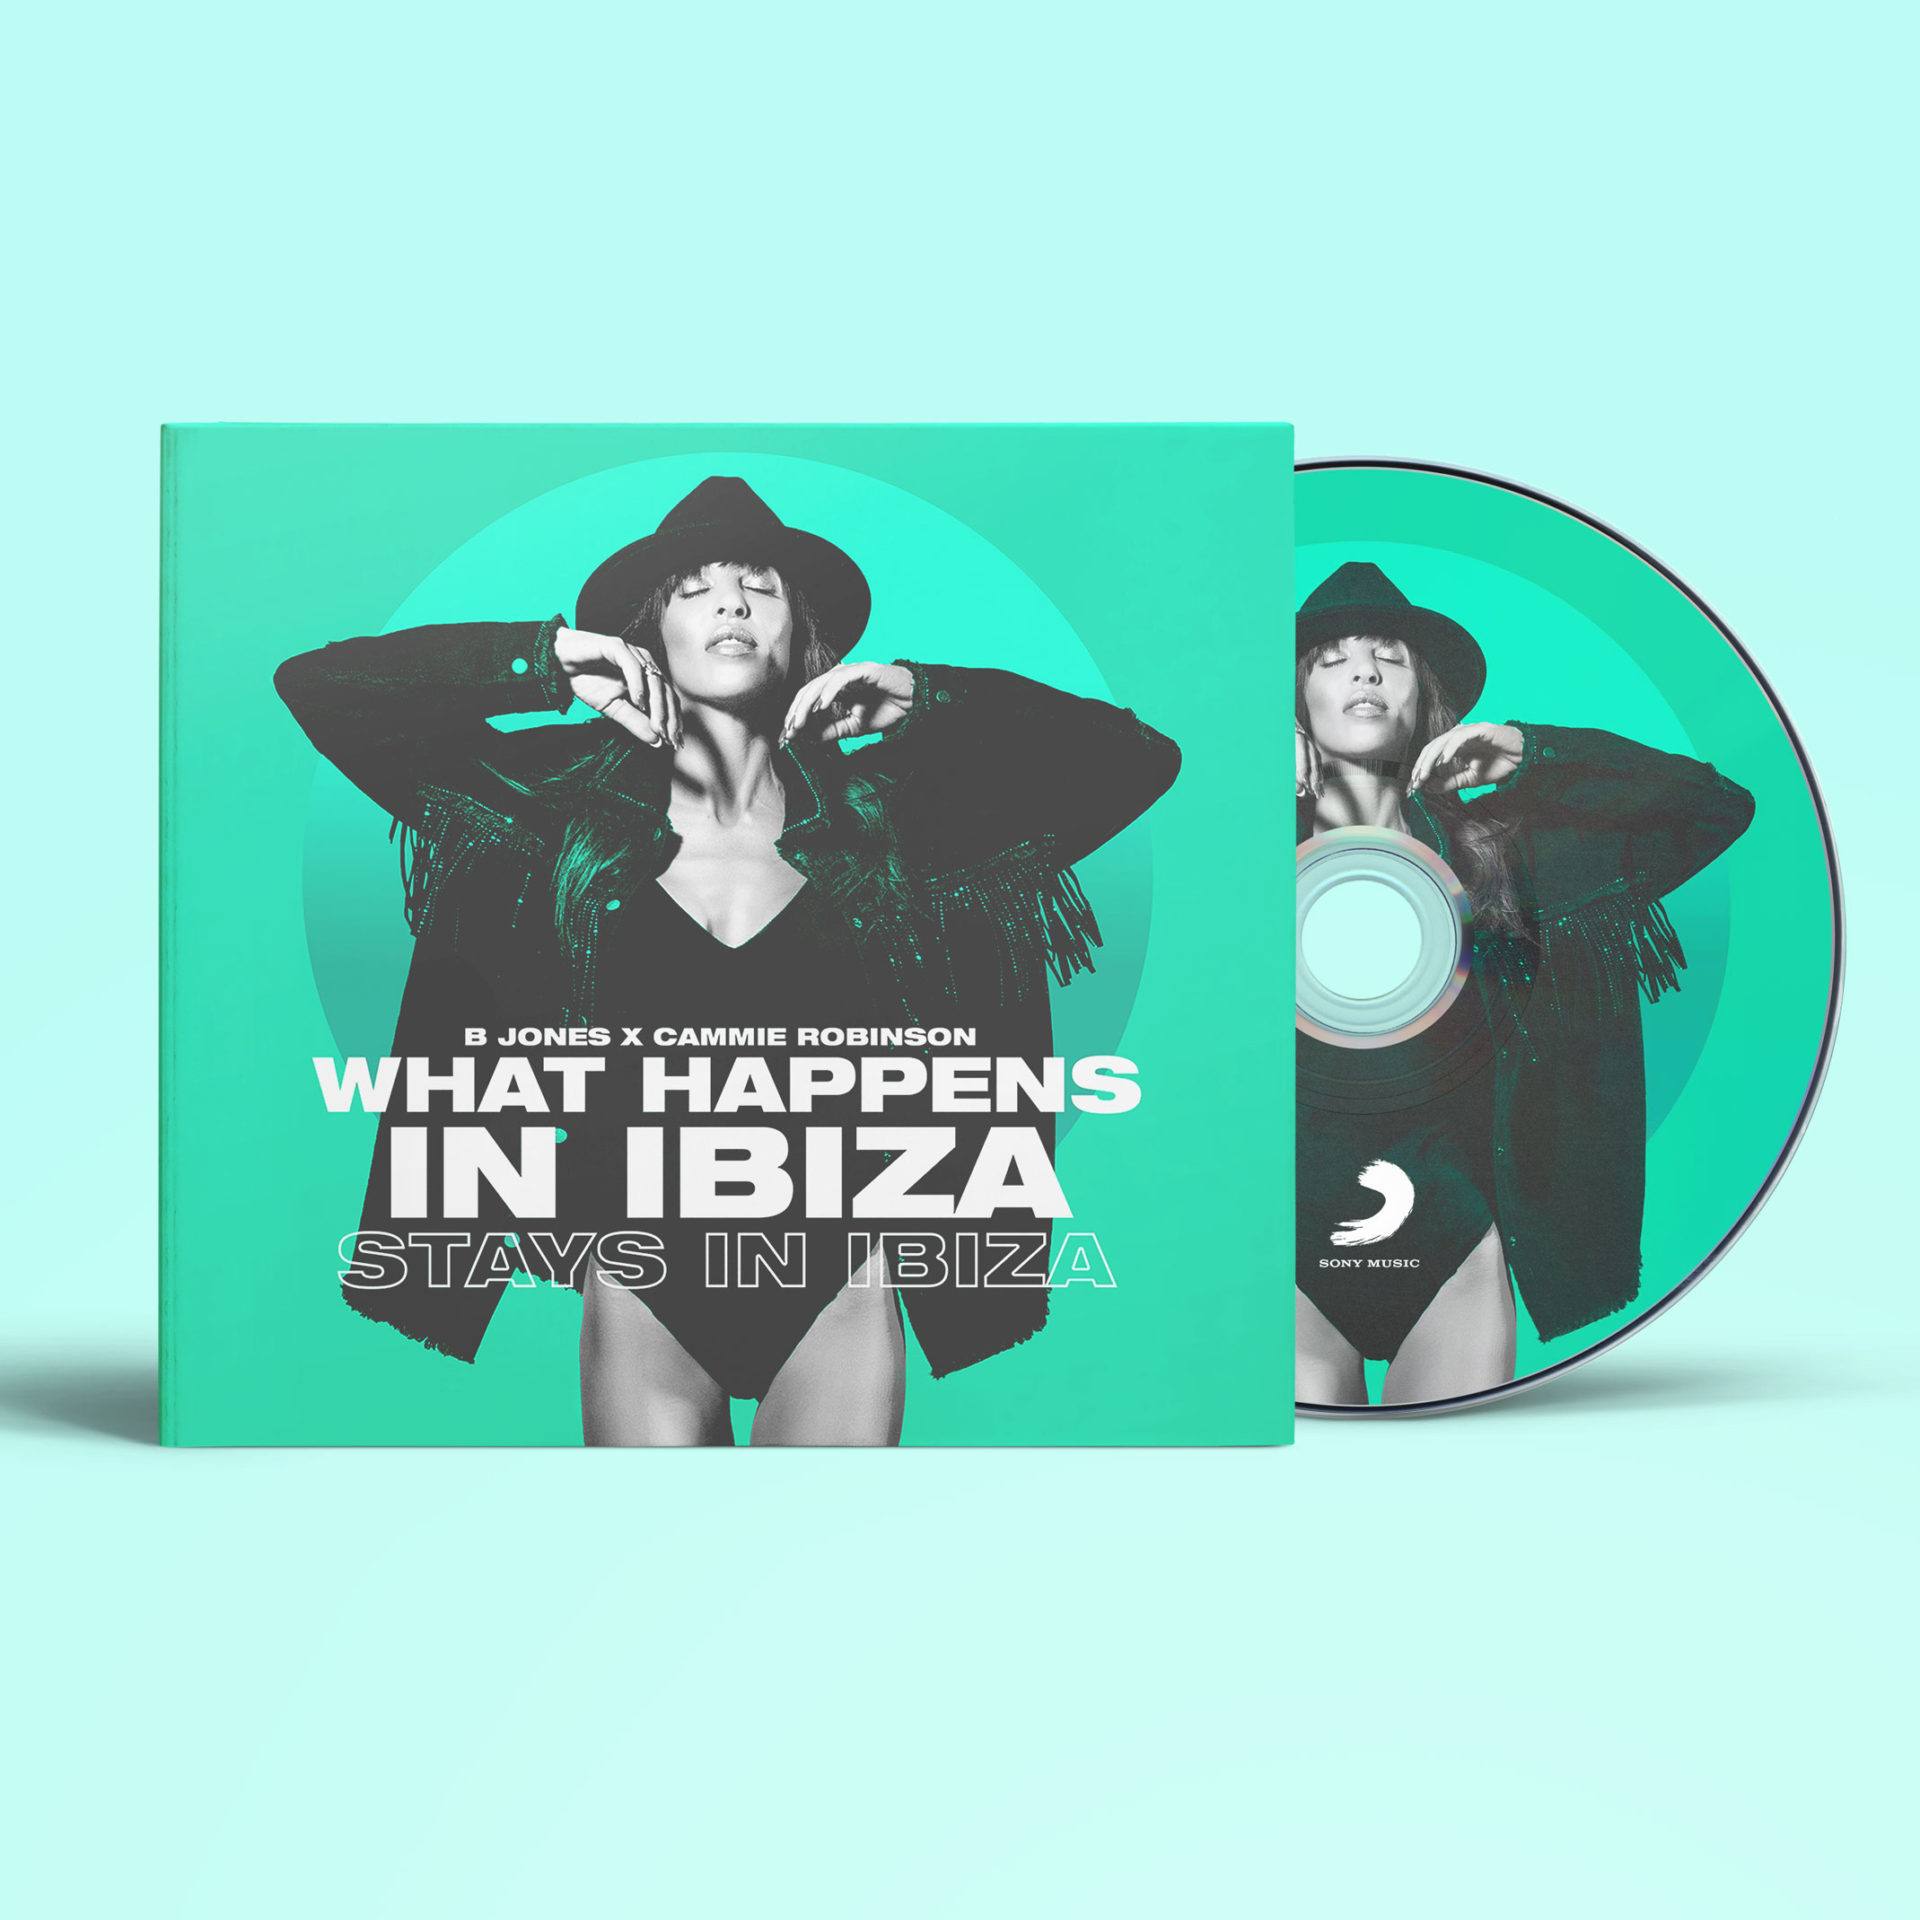 B Jones x Cammie Robinson – What Happens in Ibiza stays in Ibiza